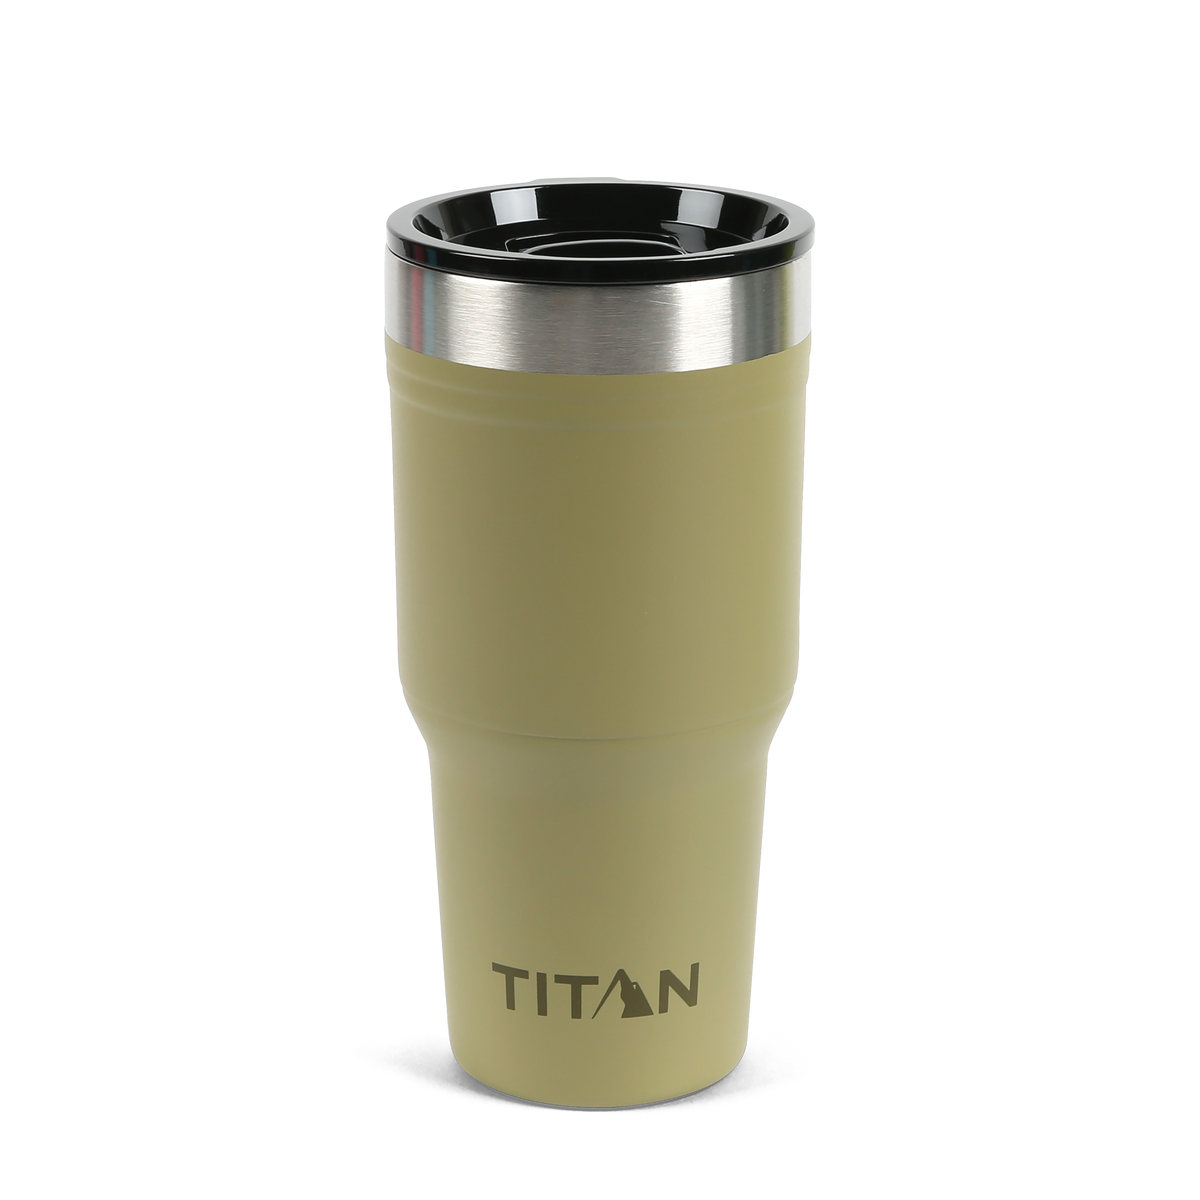  Arctic Zone Titan Thermal Mug - 14 oz. - 24 hr 151562-24HR